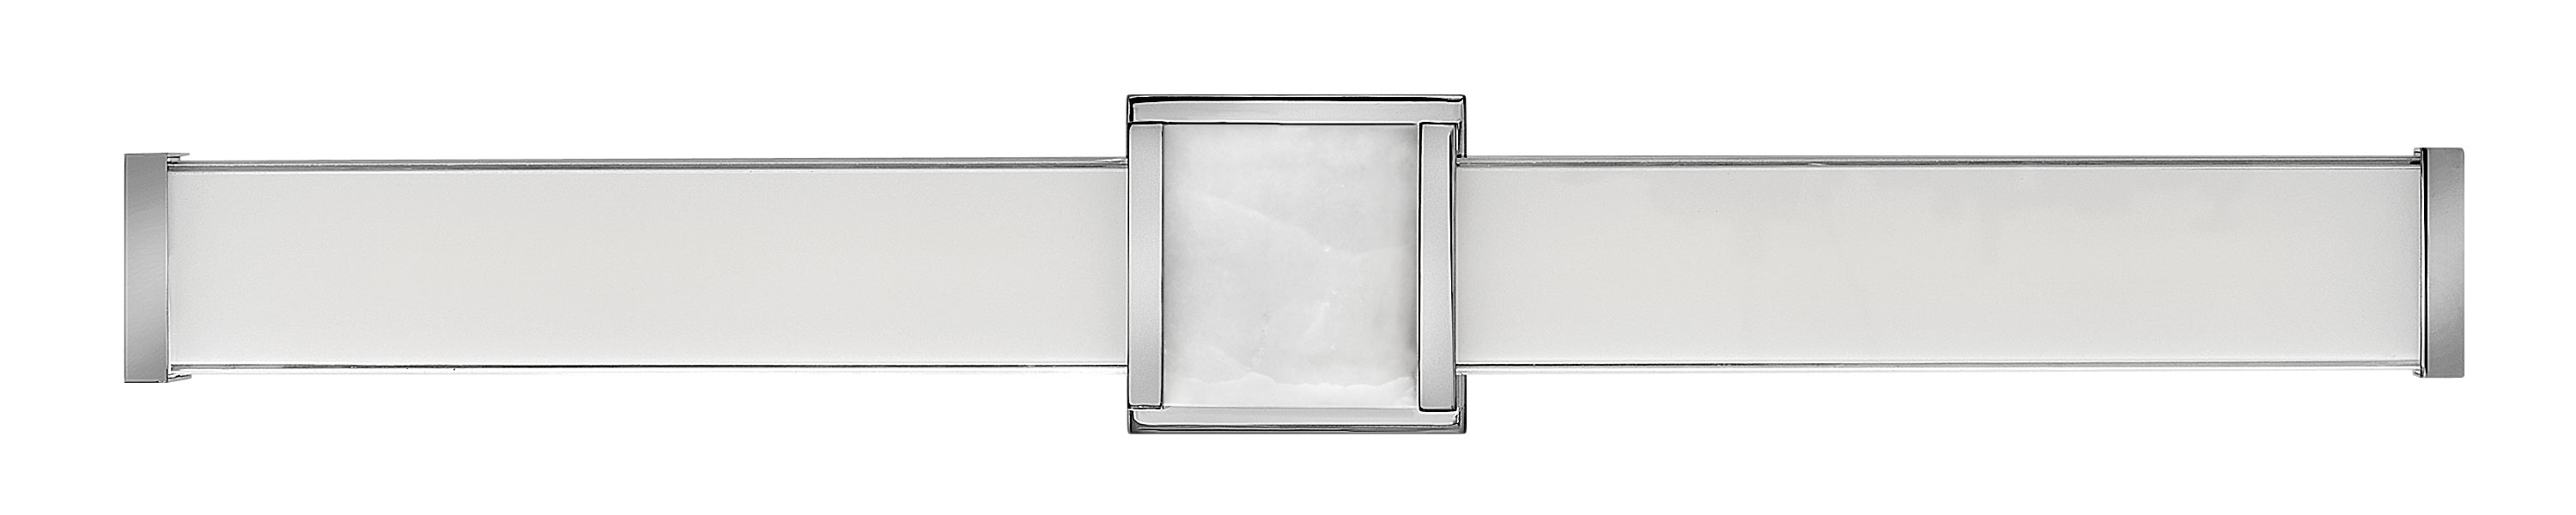 PIETRA Bathroom sconce Chrome INTEGRATED LED - 51583CM | HINKLEY